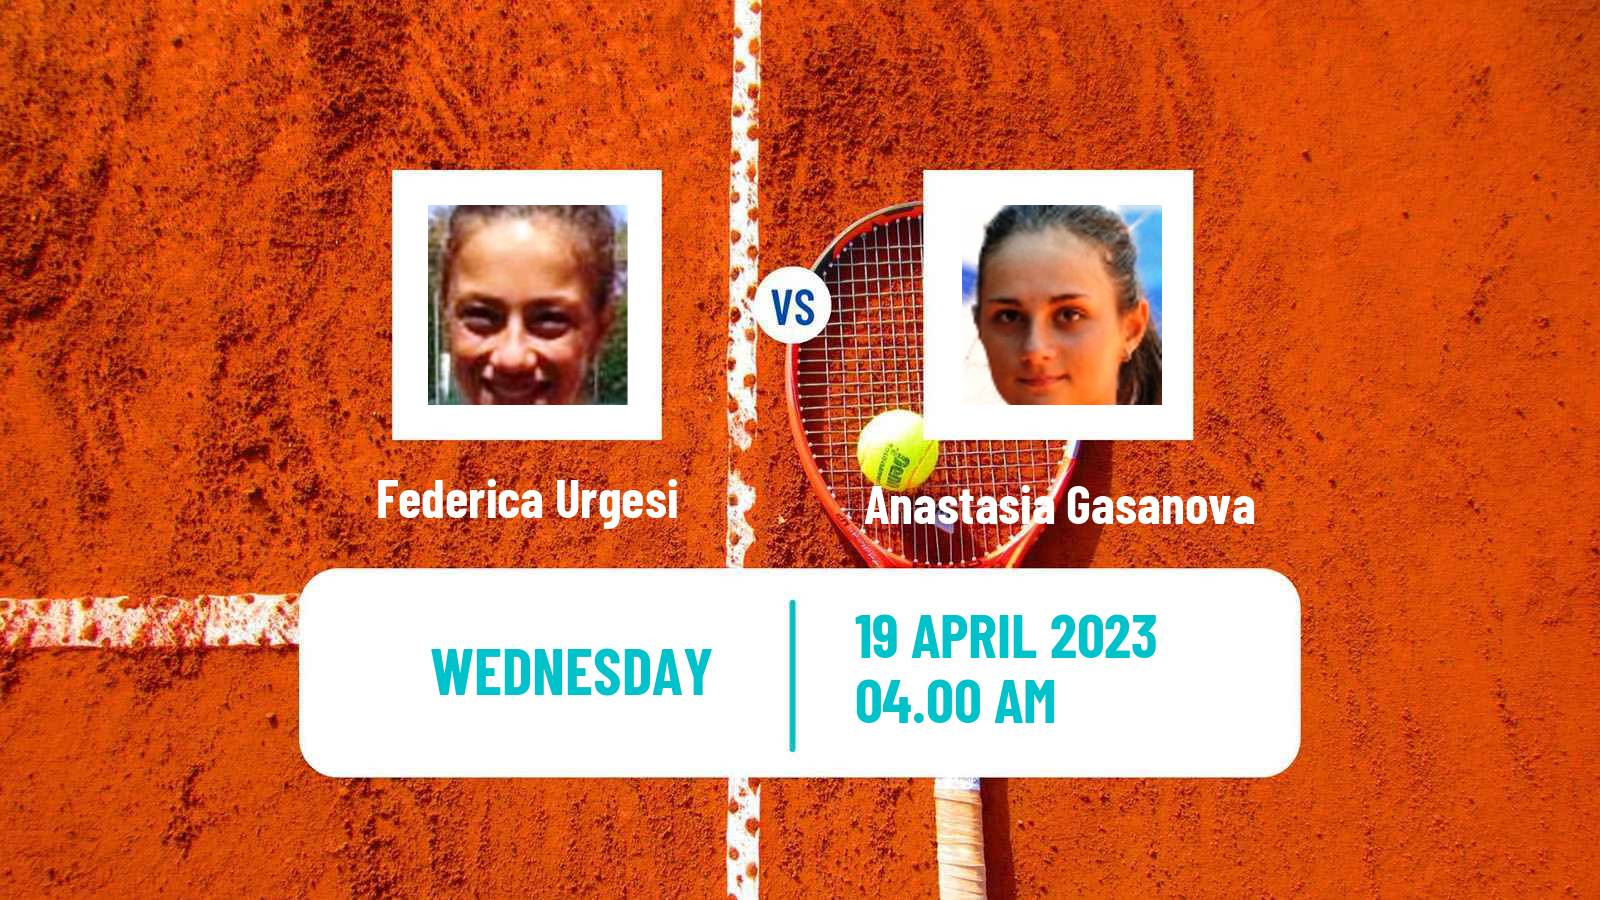 Tennis ITF Tournaments Federica Urgesi - Anastasia Gasanova